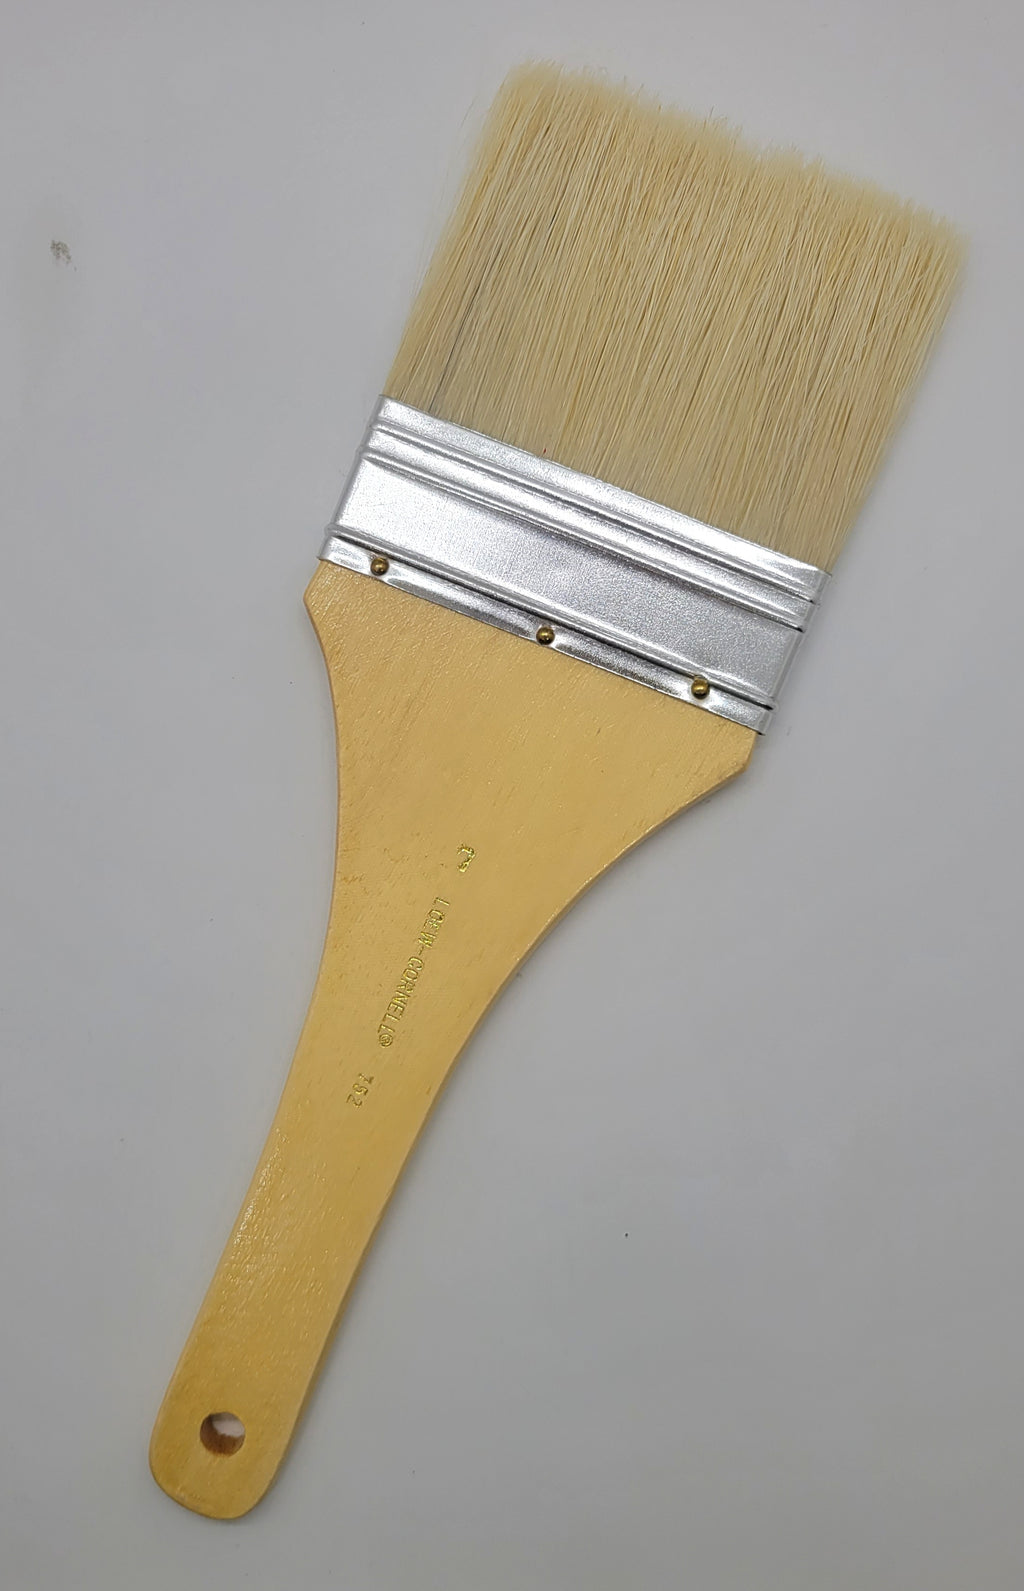 752 Flat Cutter, Assorted Bristle Brush by Loew-Cornell